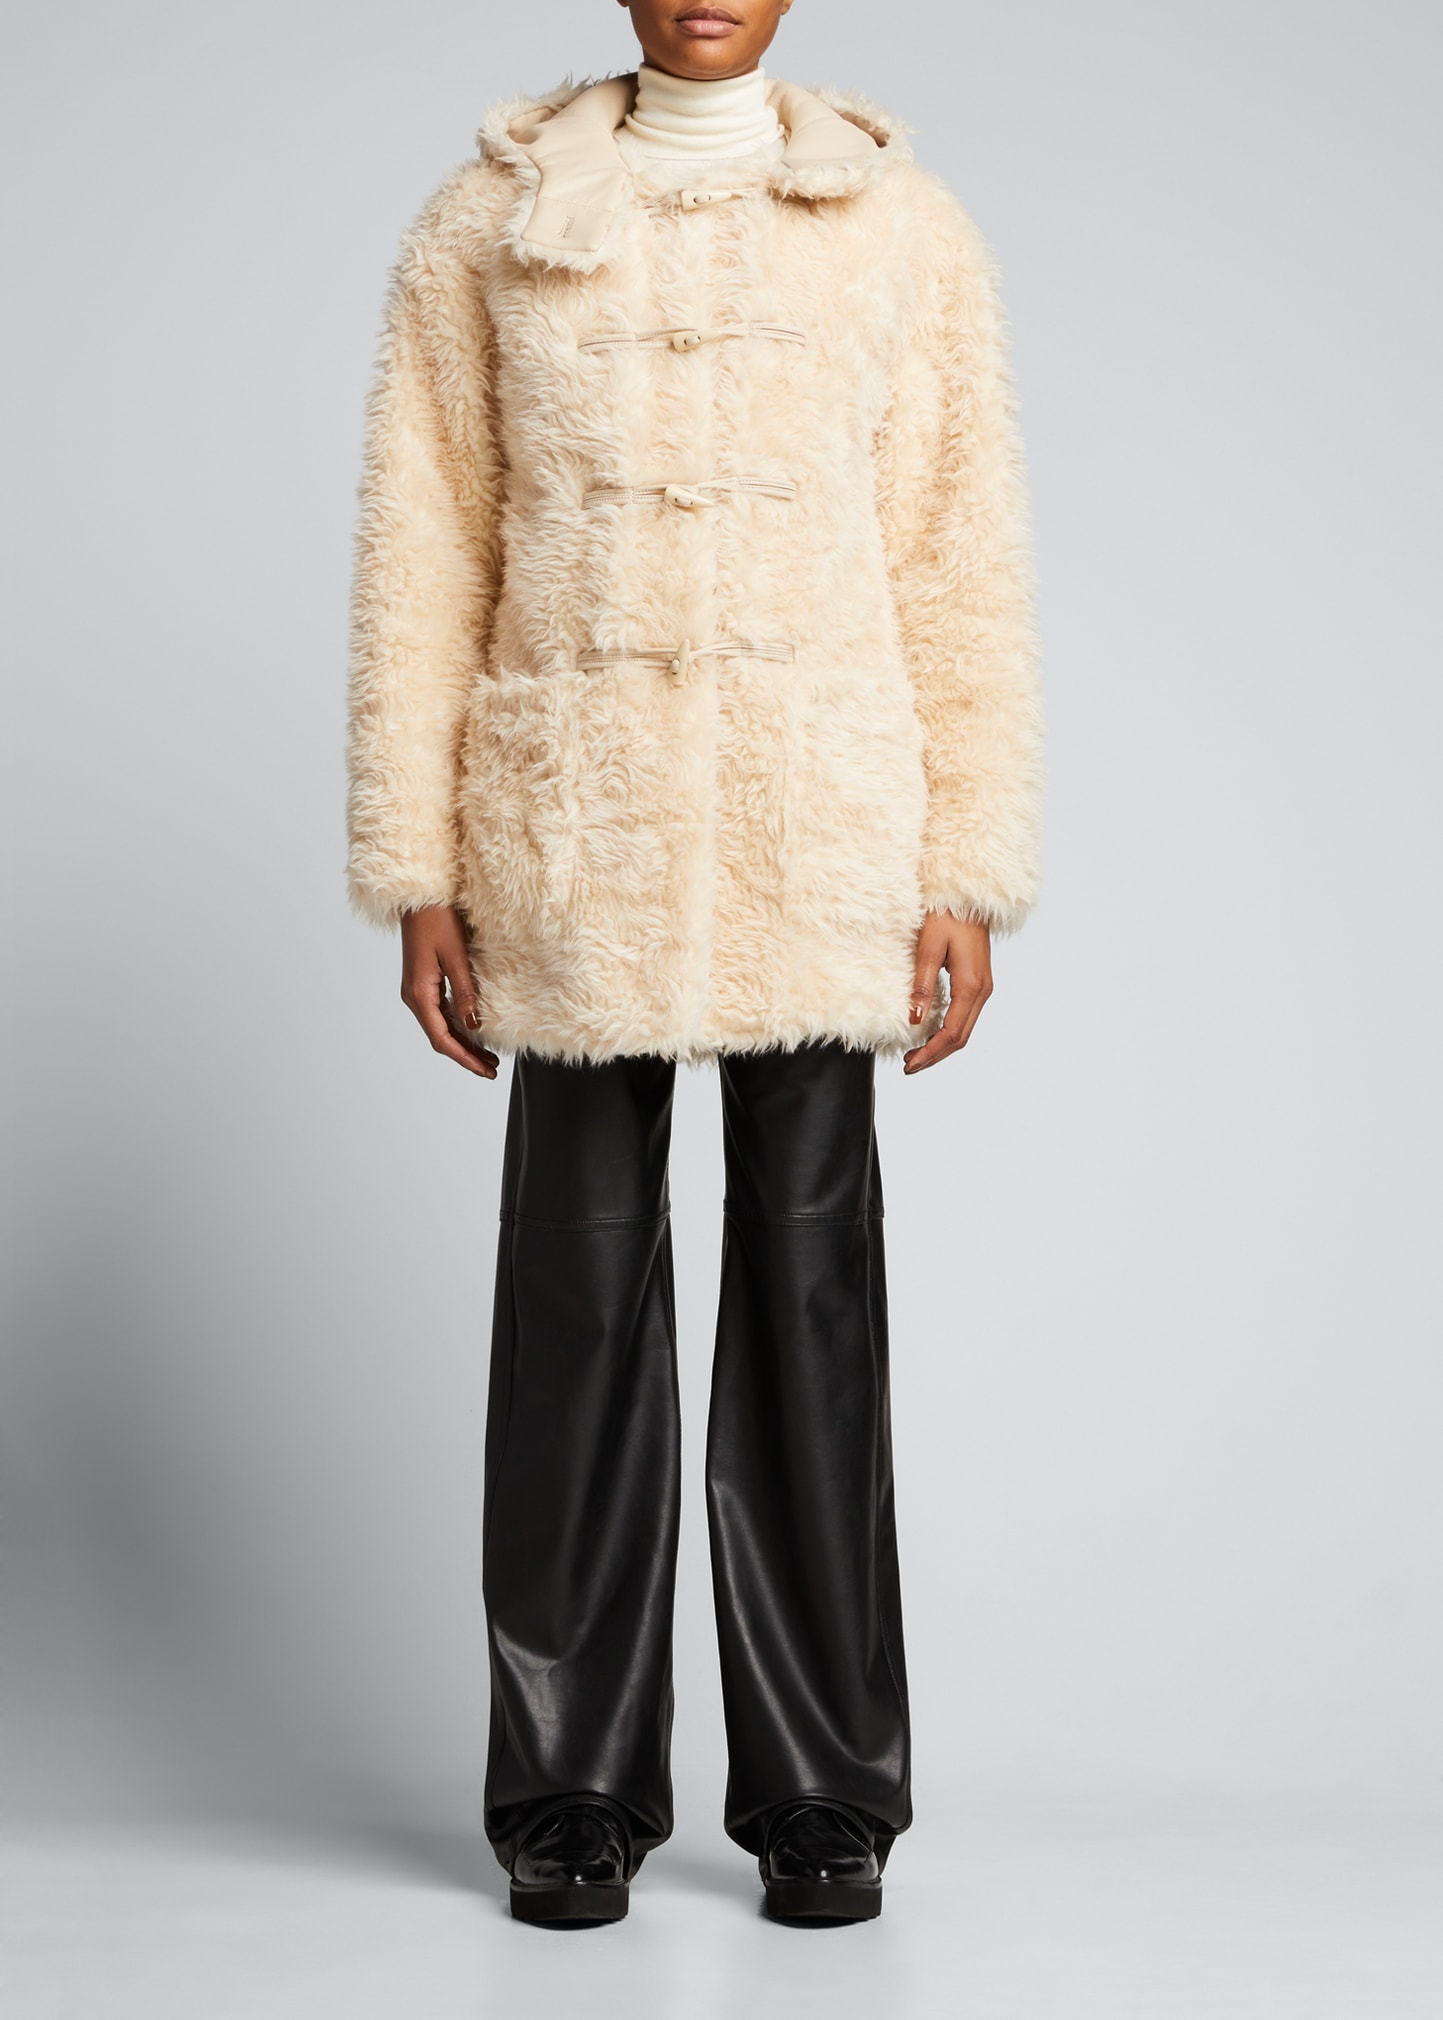 Chewy Vuitton Fur Coat – Winston Wants Fashion Wardrobe